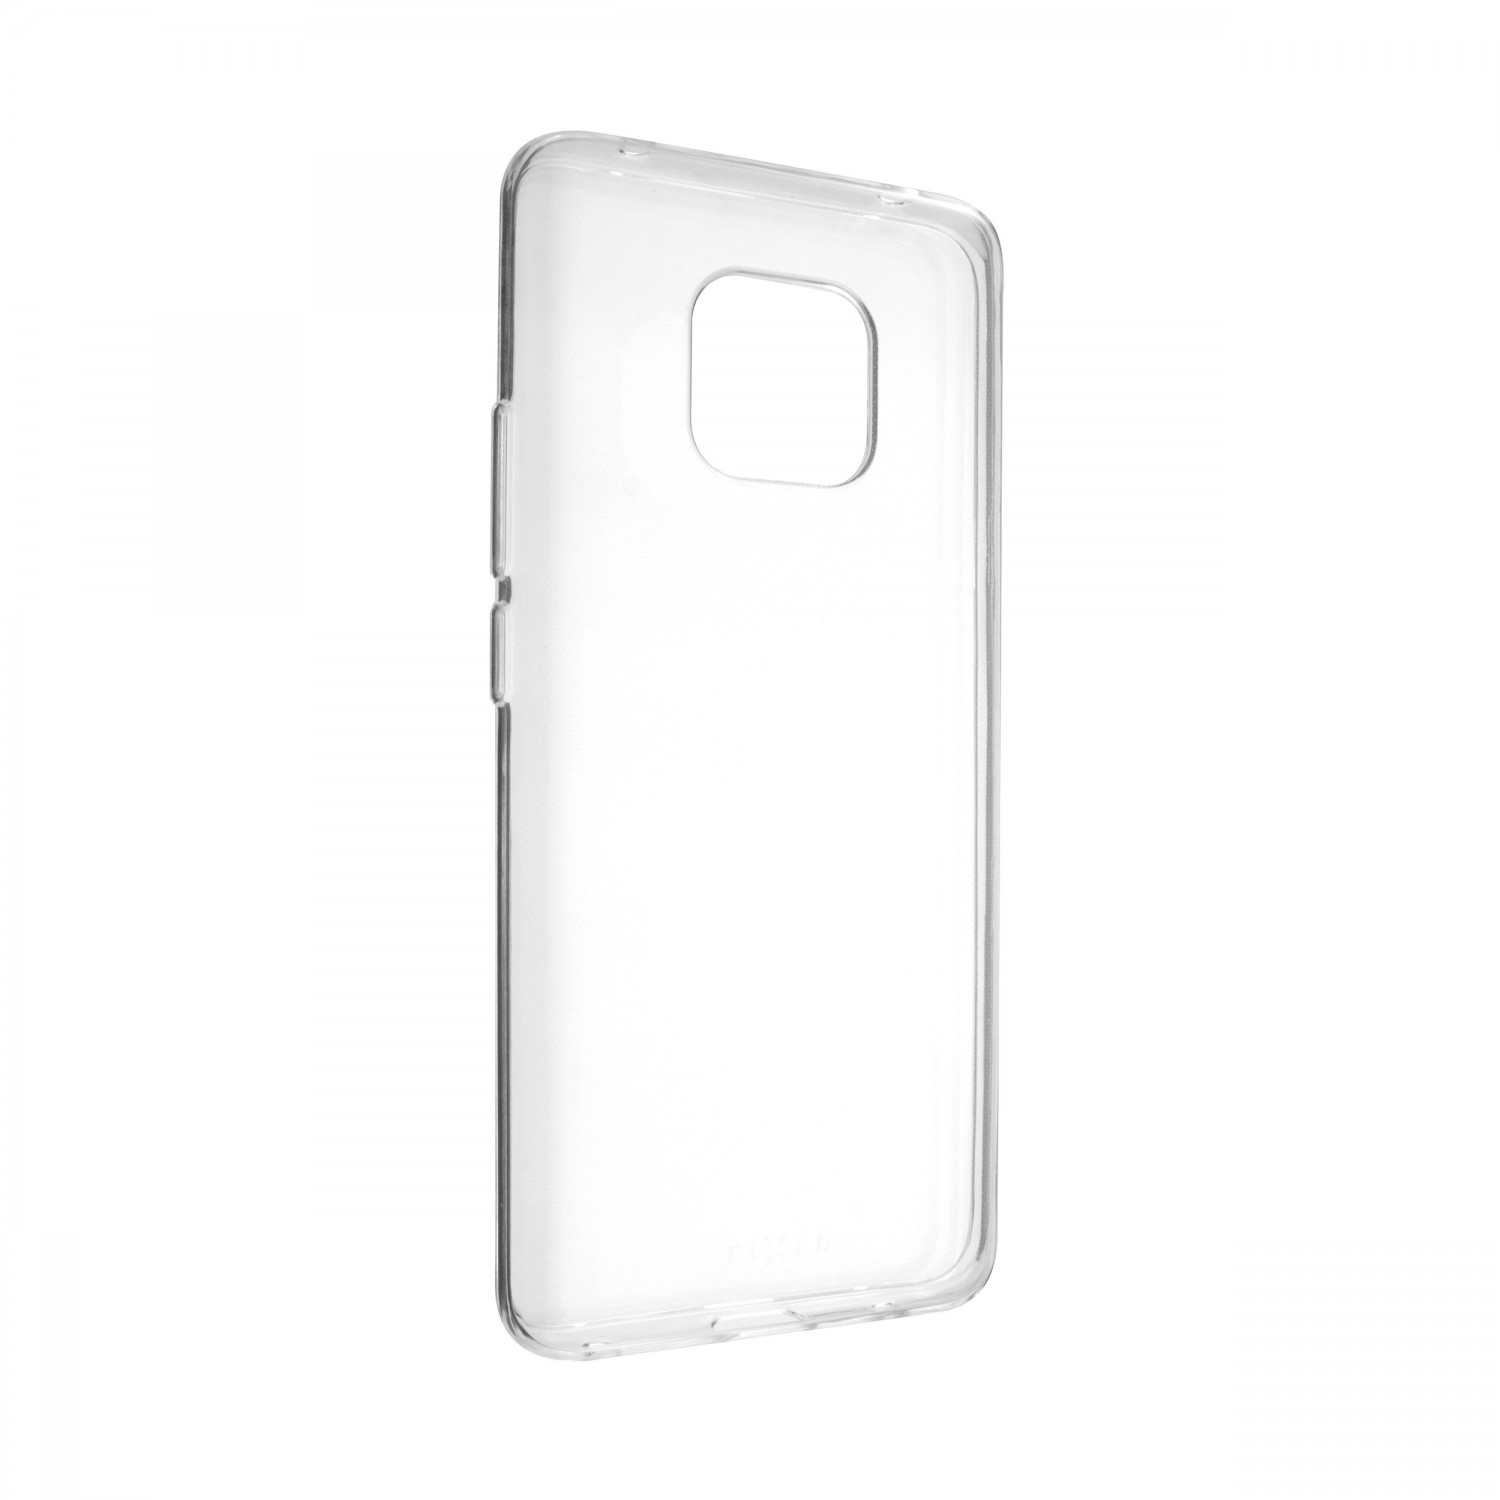 Ultratenké silikonové pouzdro pouzdro FIXED Skin pro Huawei Mate 20 Pro, transparentní